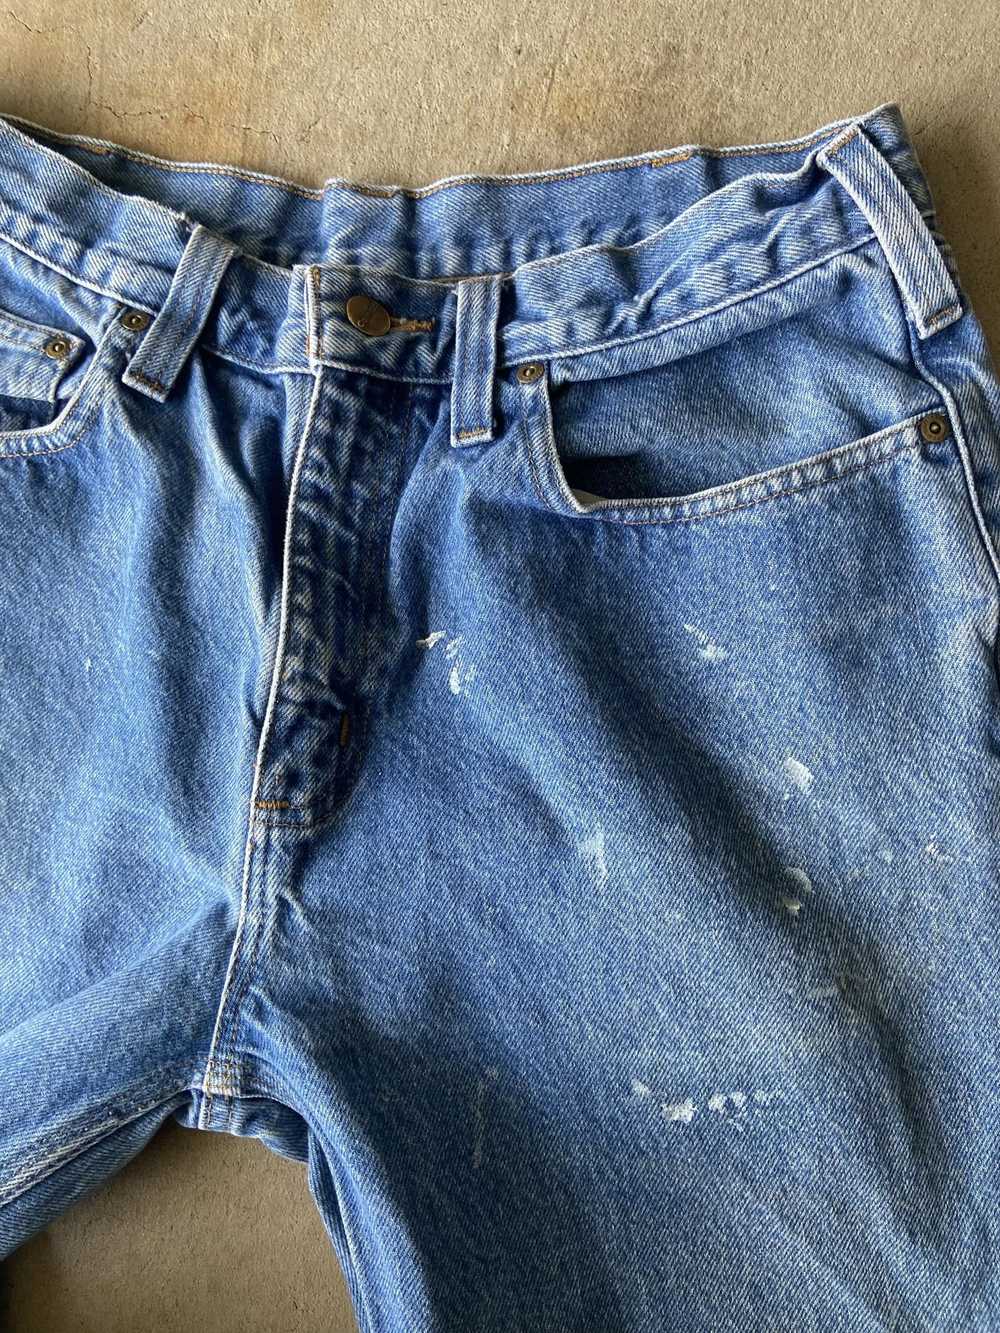 Carhartt Carhartt Thrashed Painter's Blue Jeans - image 4